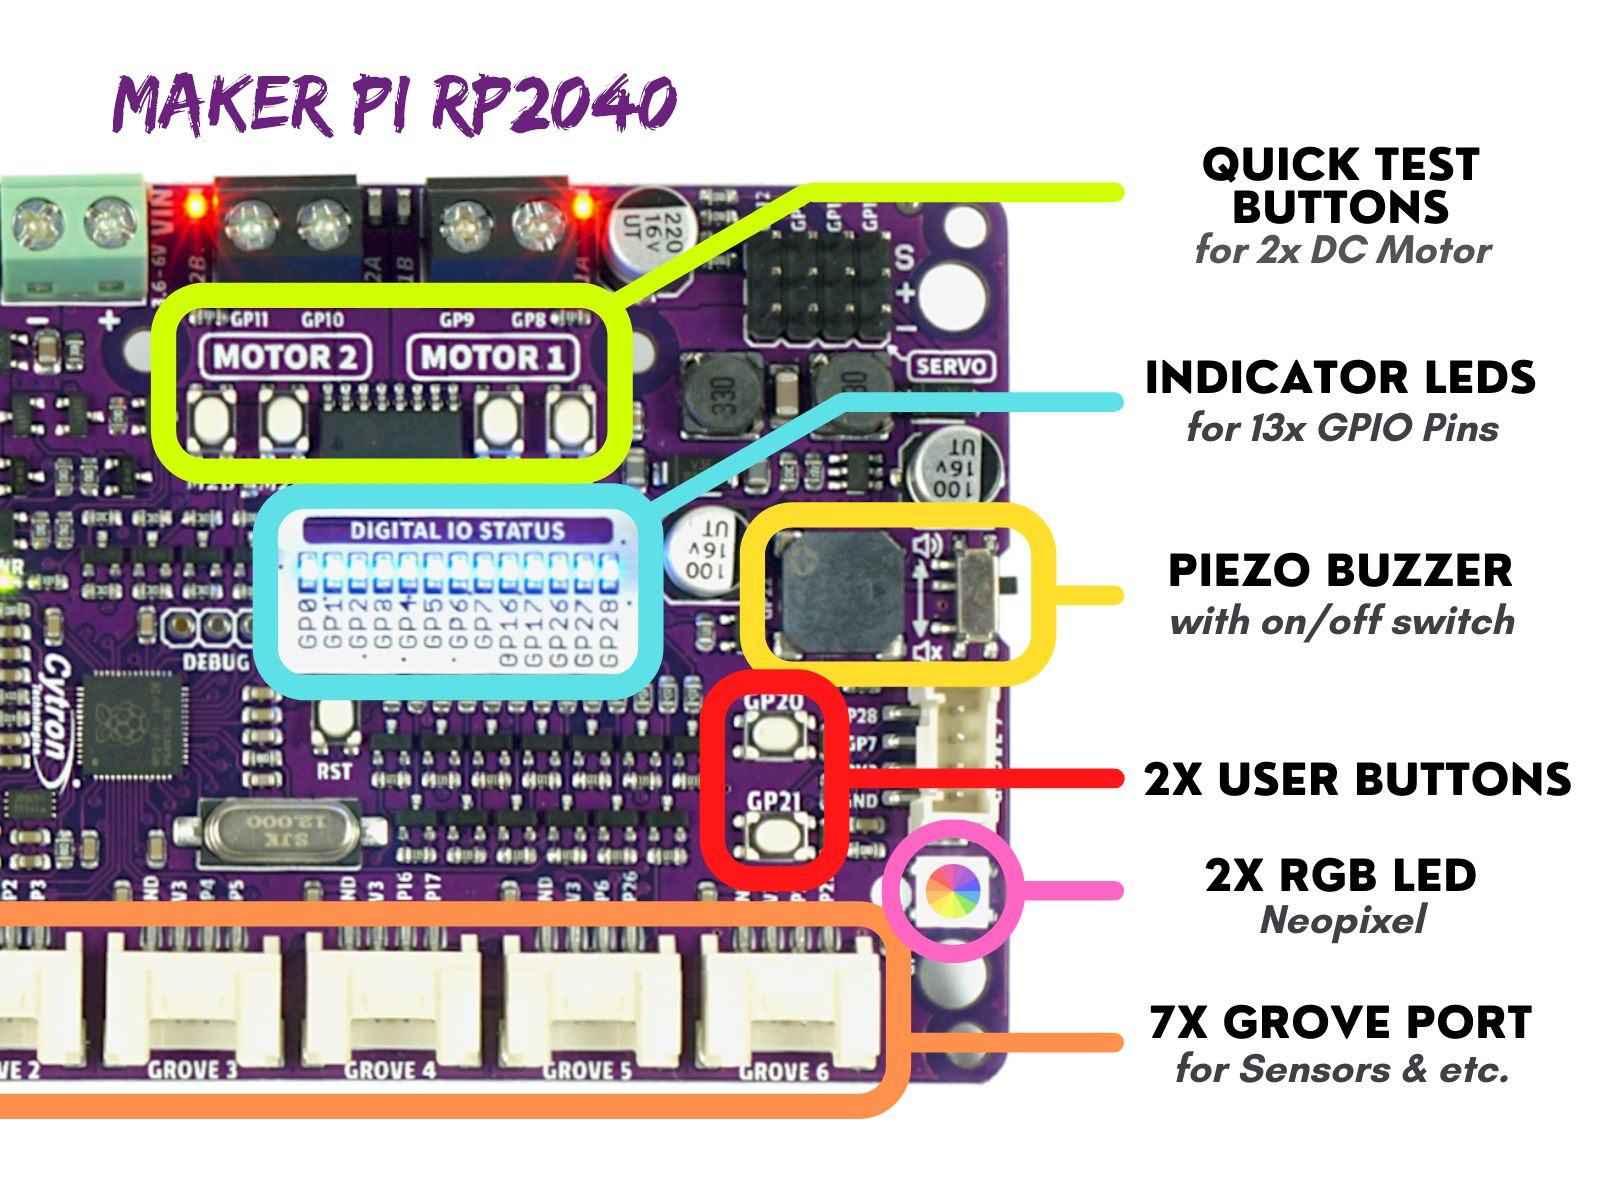 Maker Pi RP2040 Labelled Components